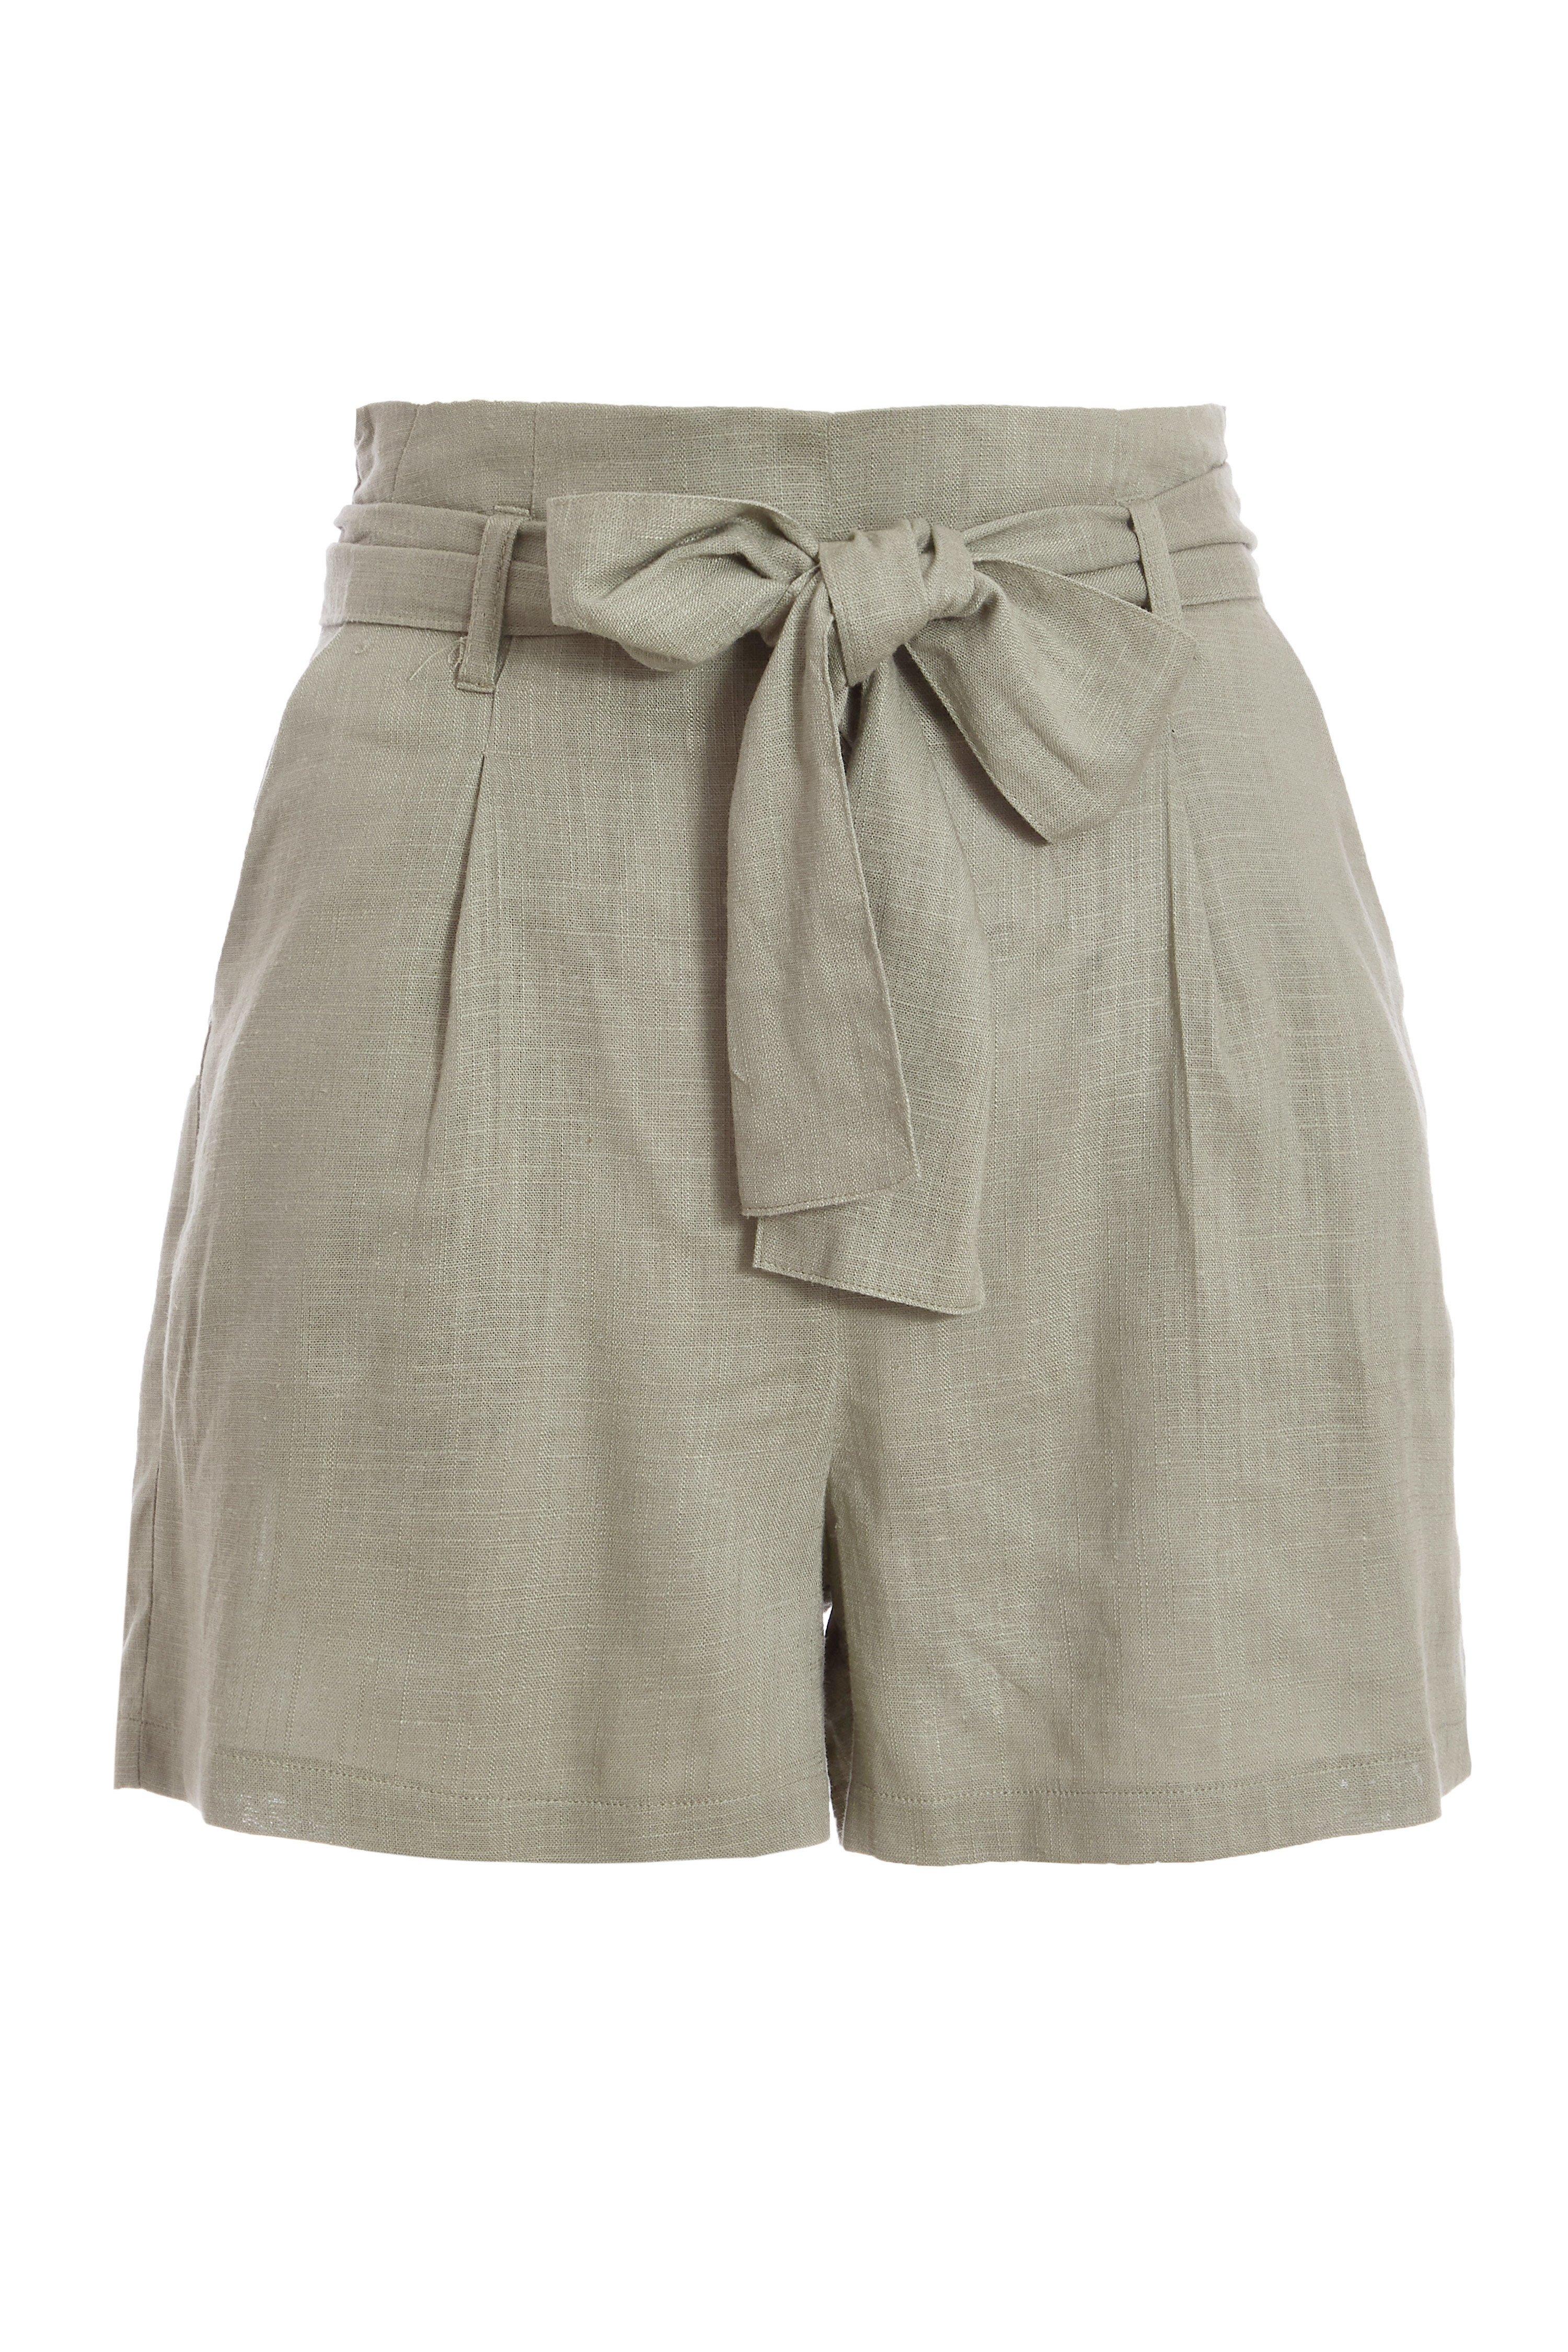 Khaki Linen Paper Bag Shorts - Quiz Clothing